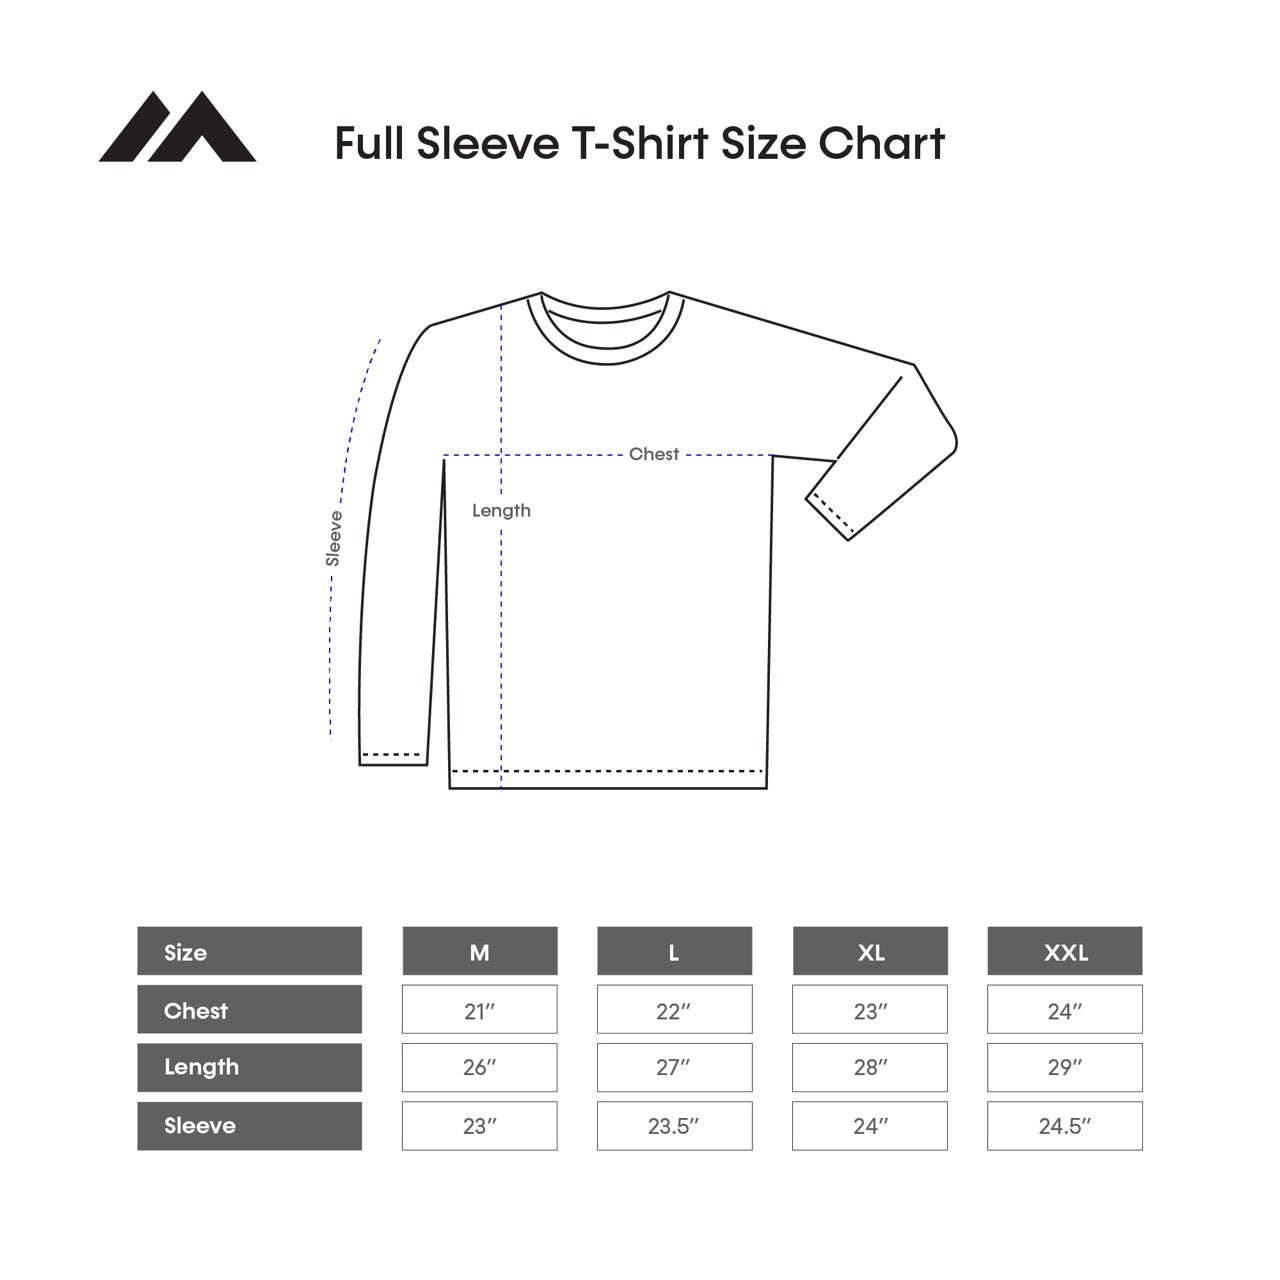 Stripe Long Sleeve T-shirt- Blue & navy